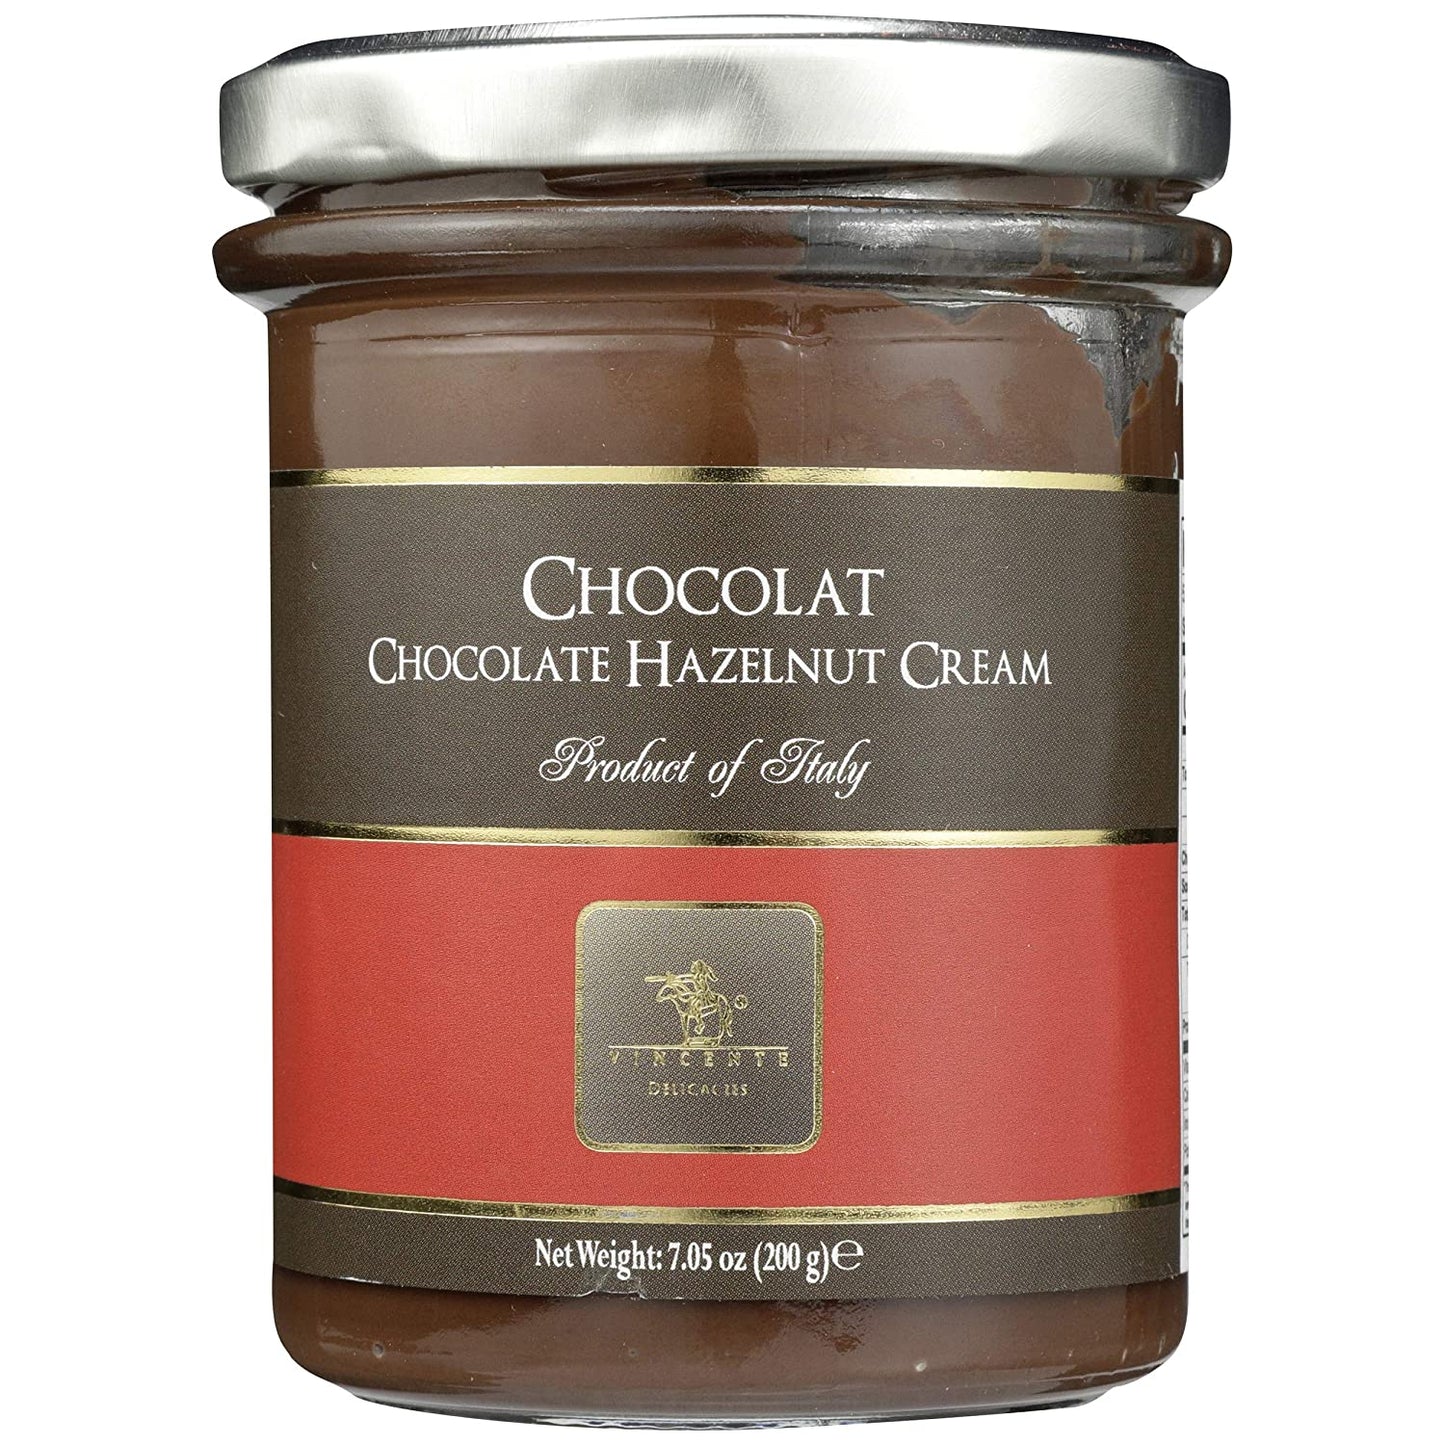 Vincente Chocolat Chocolate Hazelnut Cream ITP-020